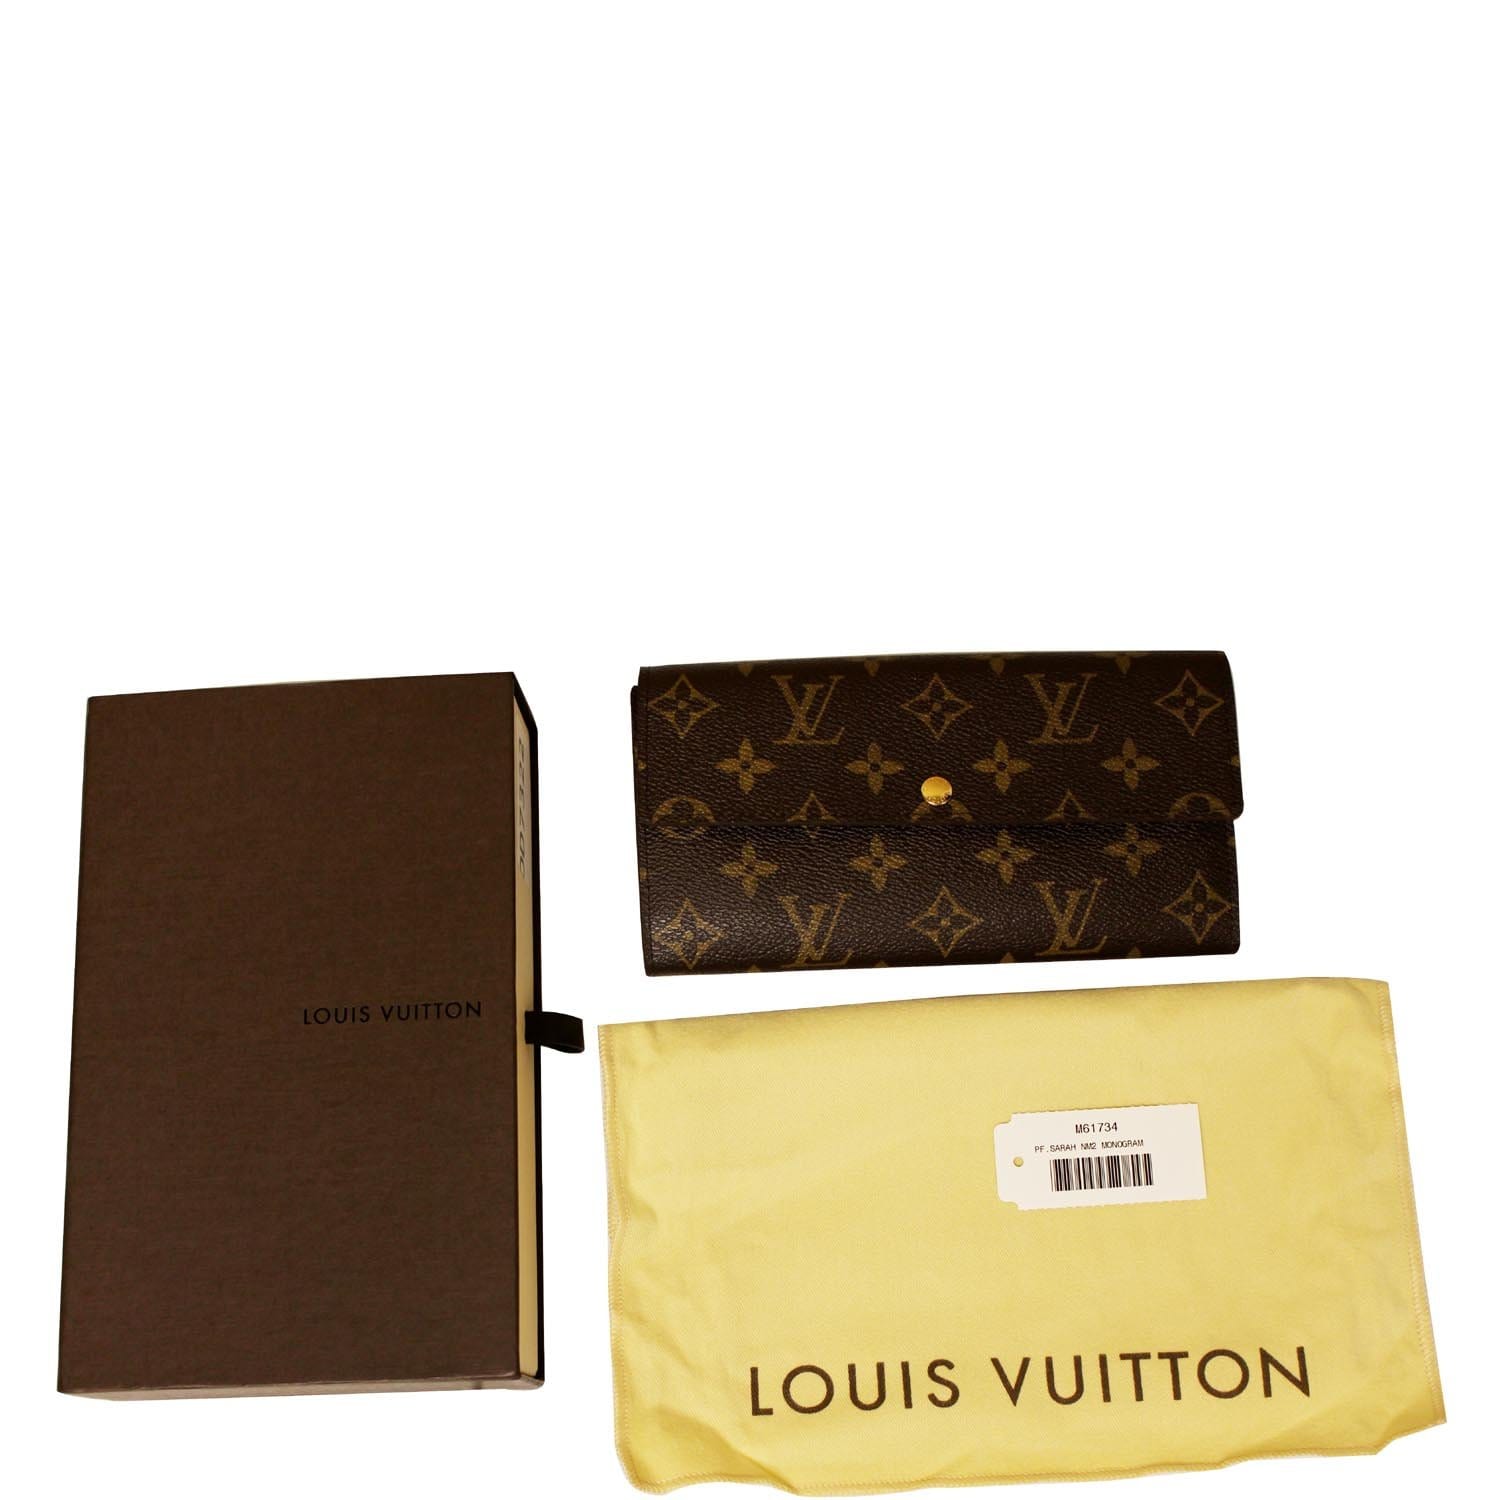 Louis Vuitton M61734 Monogram Canvas Purse - Brown